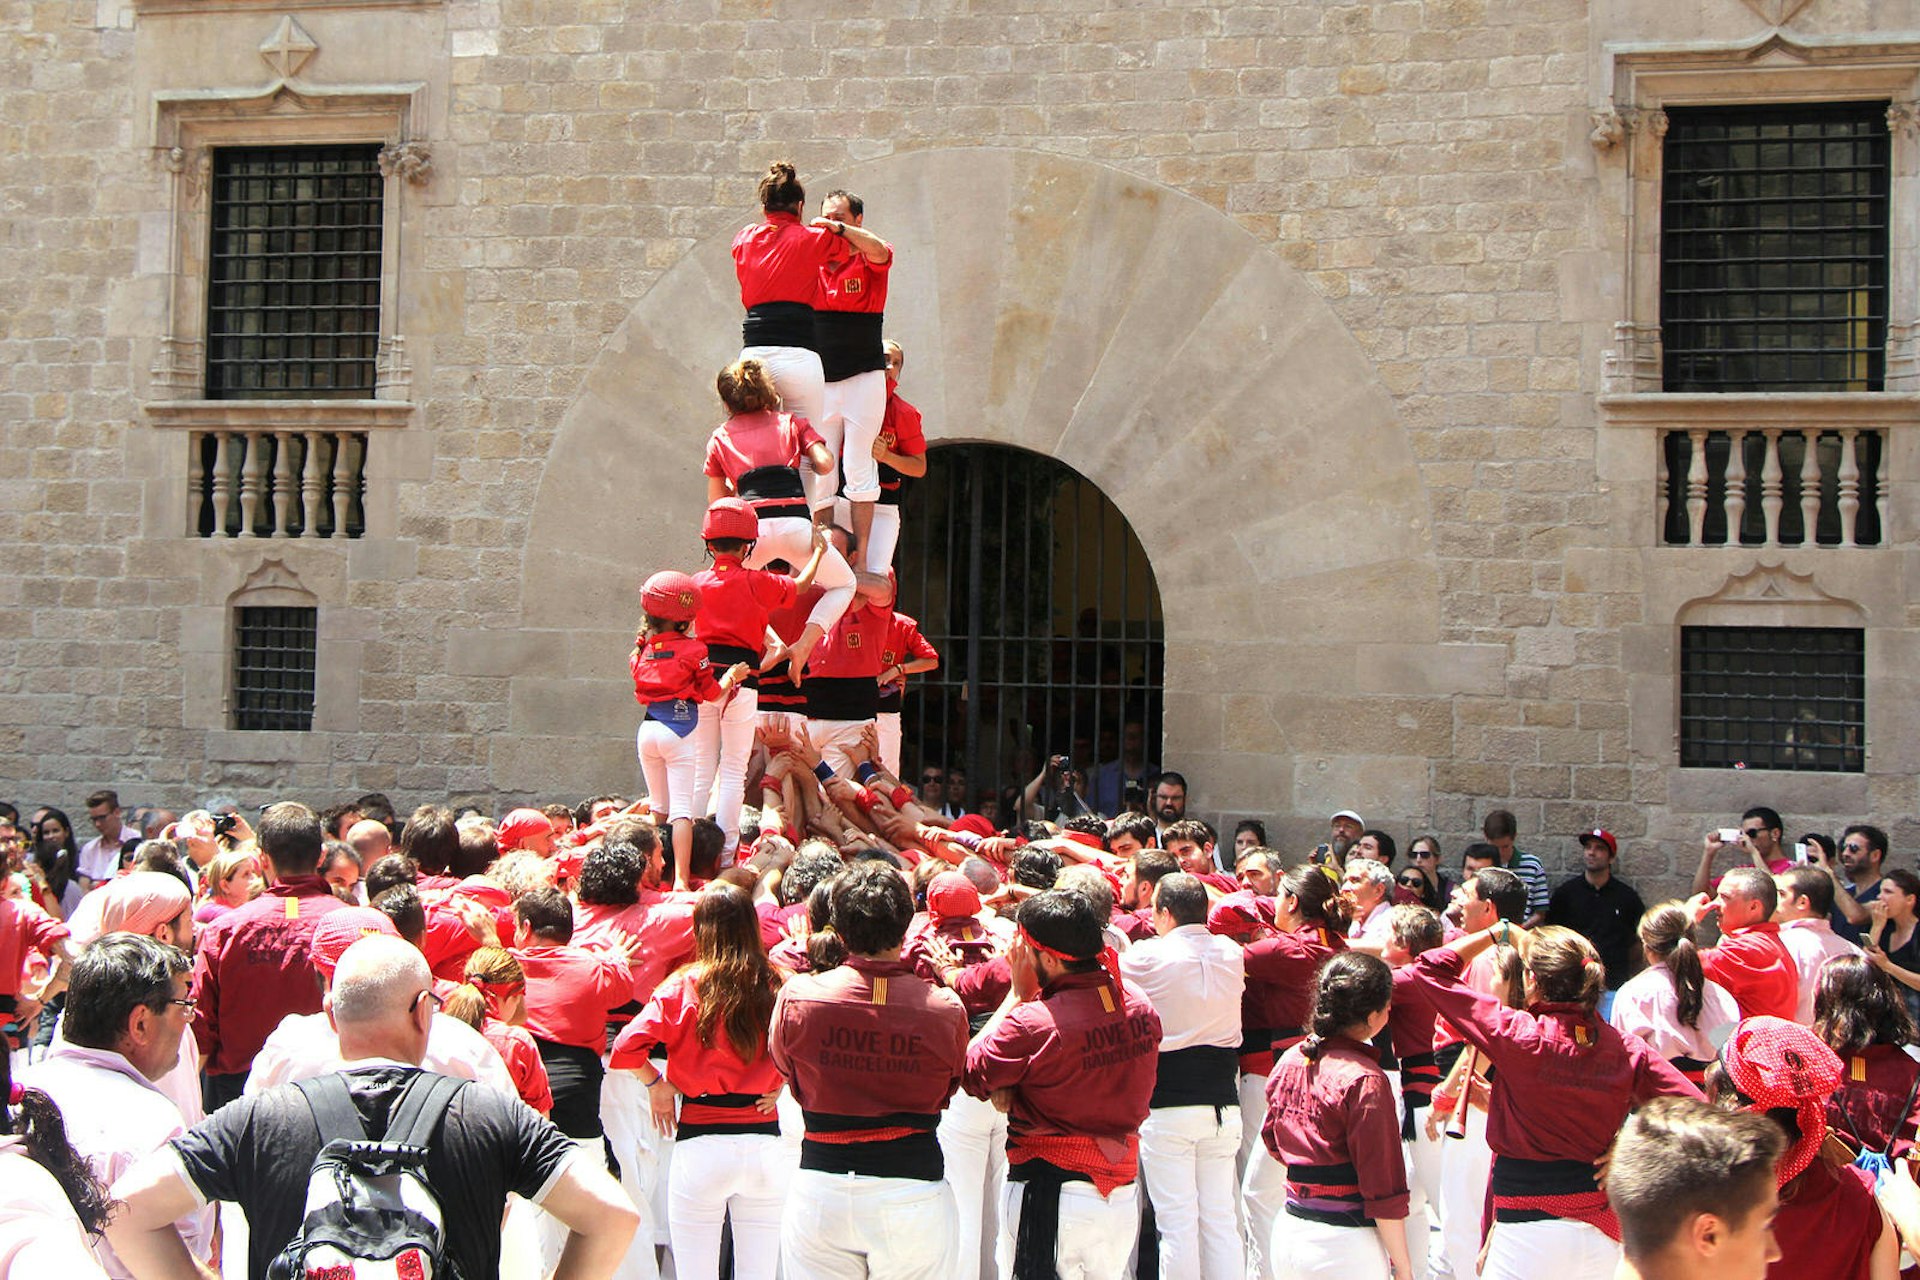 Castellers (people who build human castles) are a regular sight during Barcelona festivals © Ivan Smuk / Shutterstock